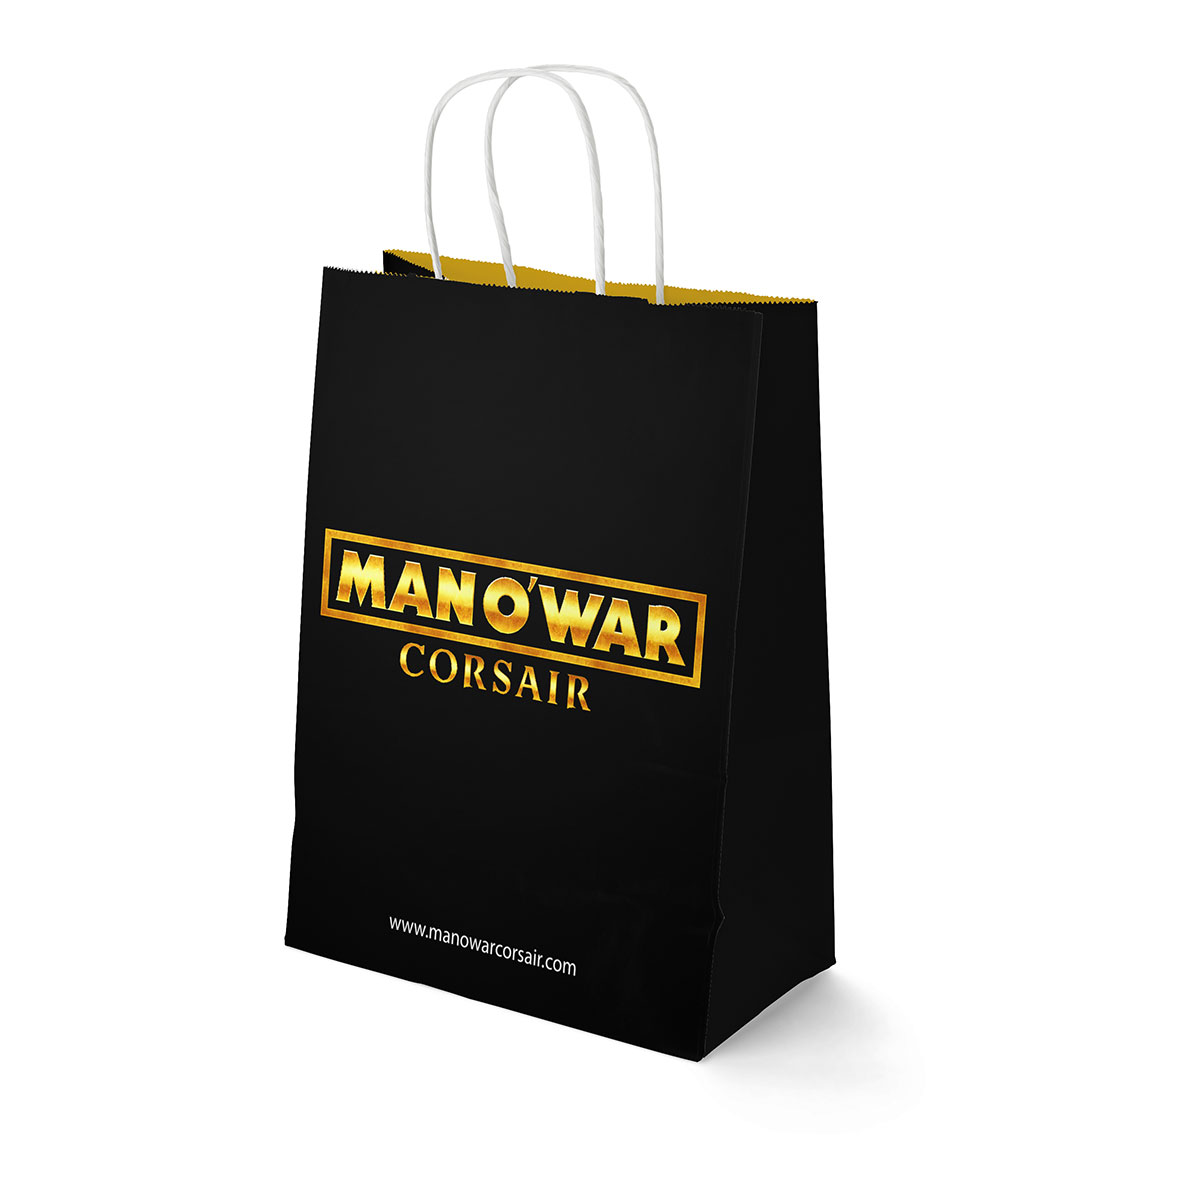 Manowar logo design printed on a bag